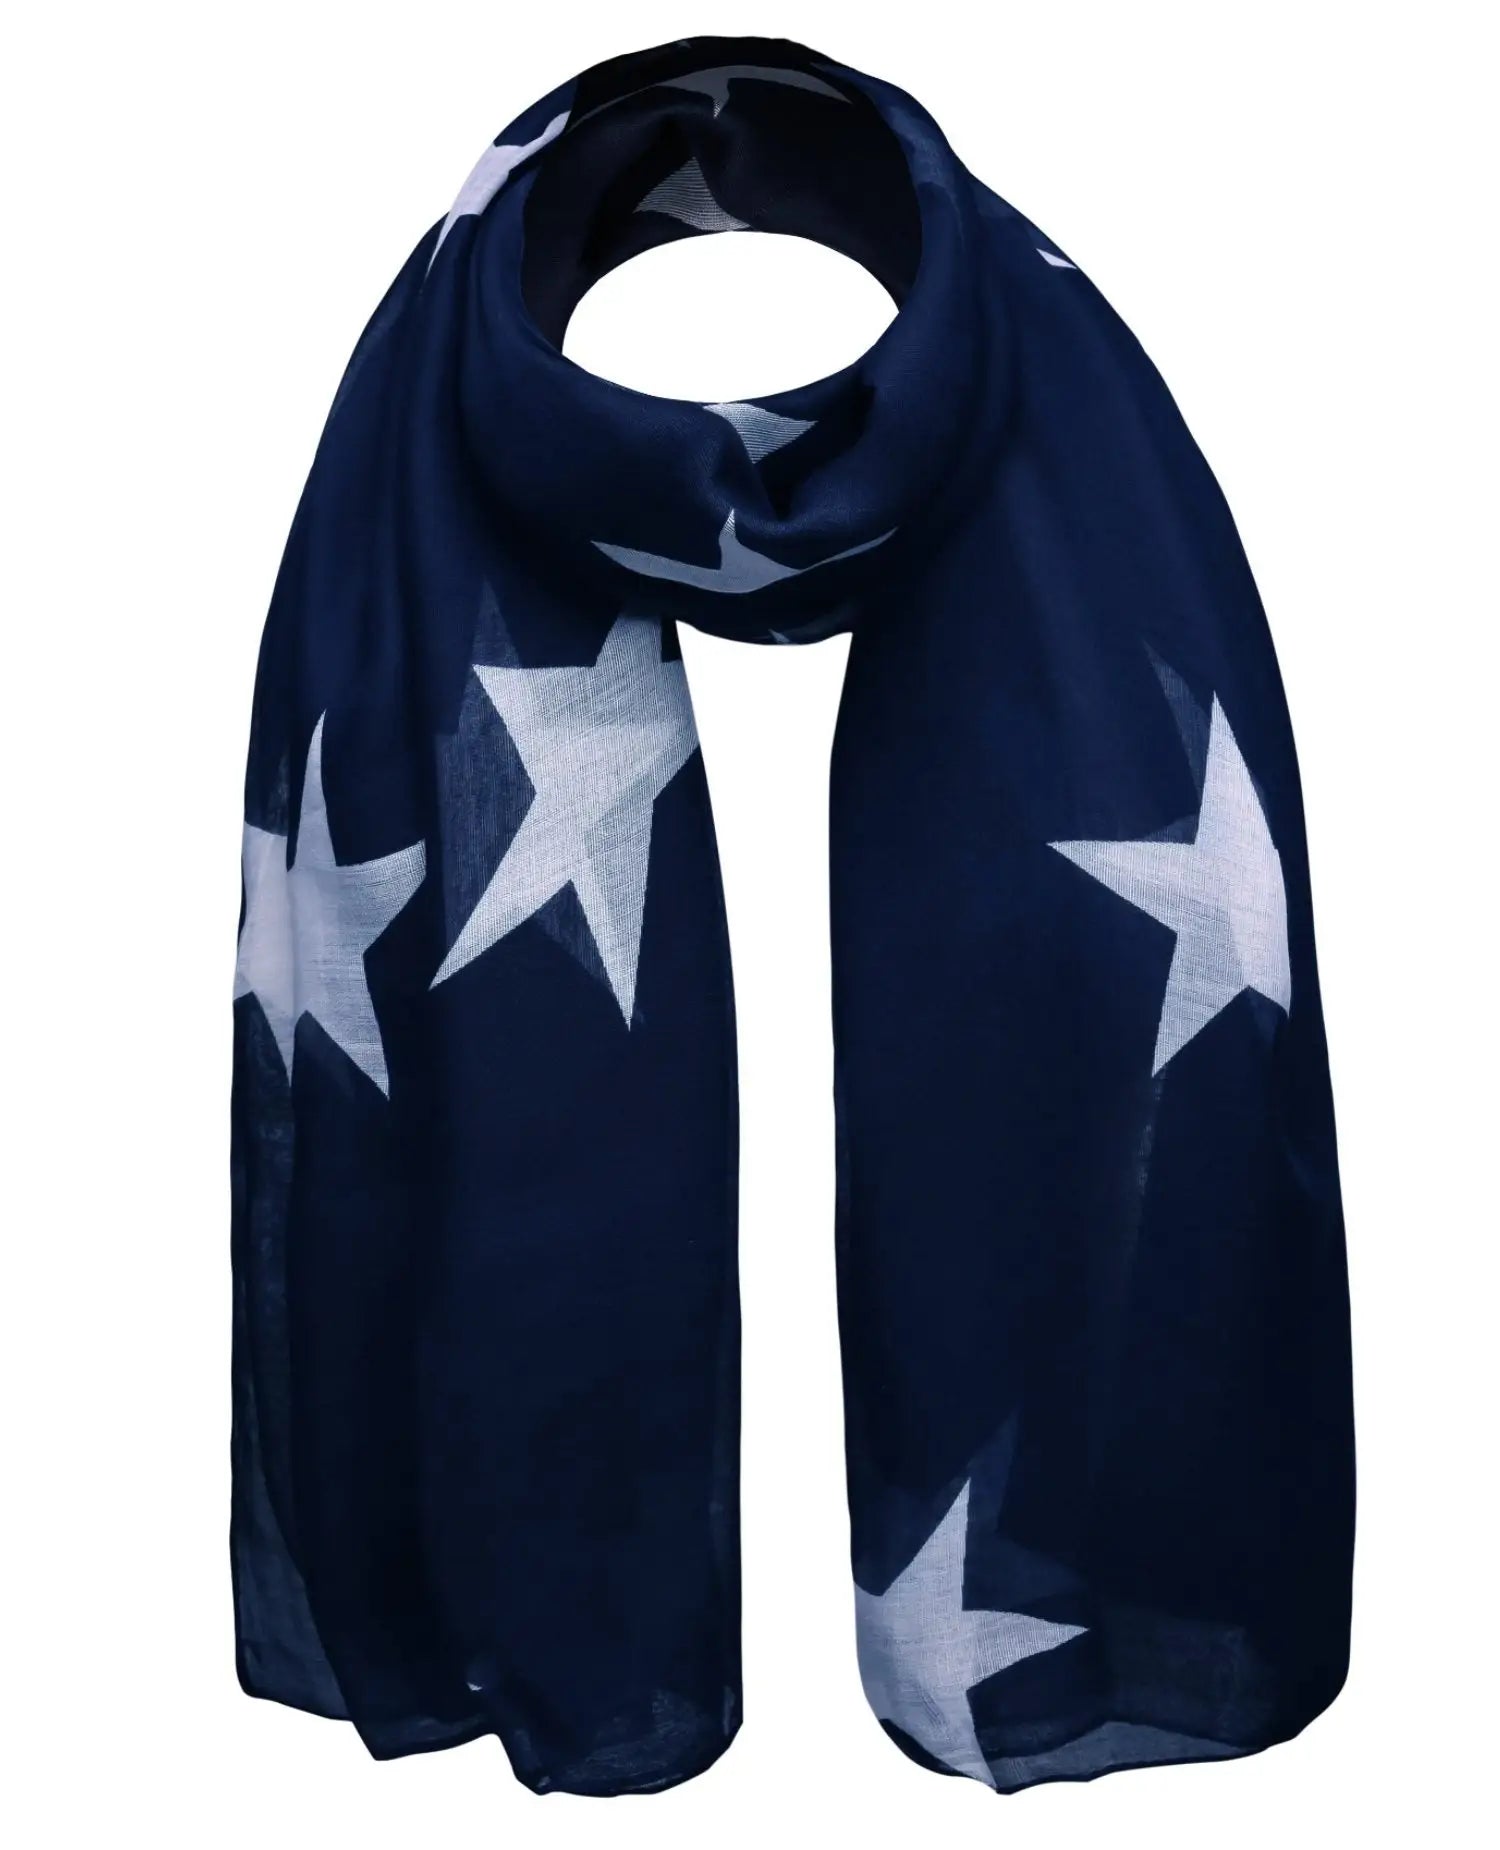 Retro star oversized navy scarf with white stars